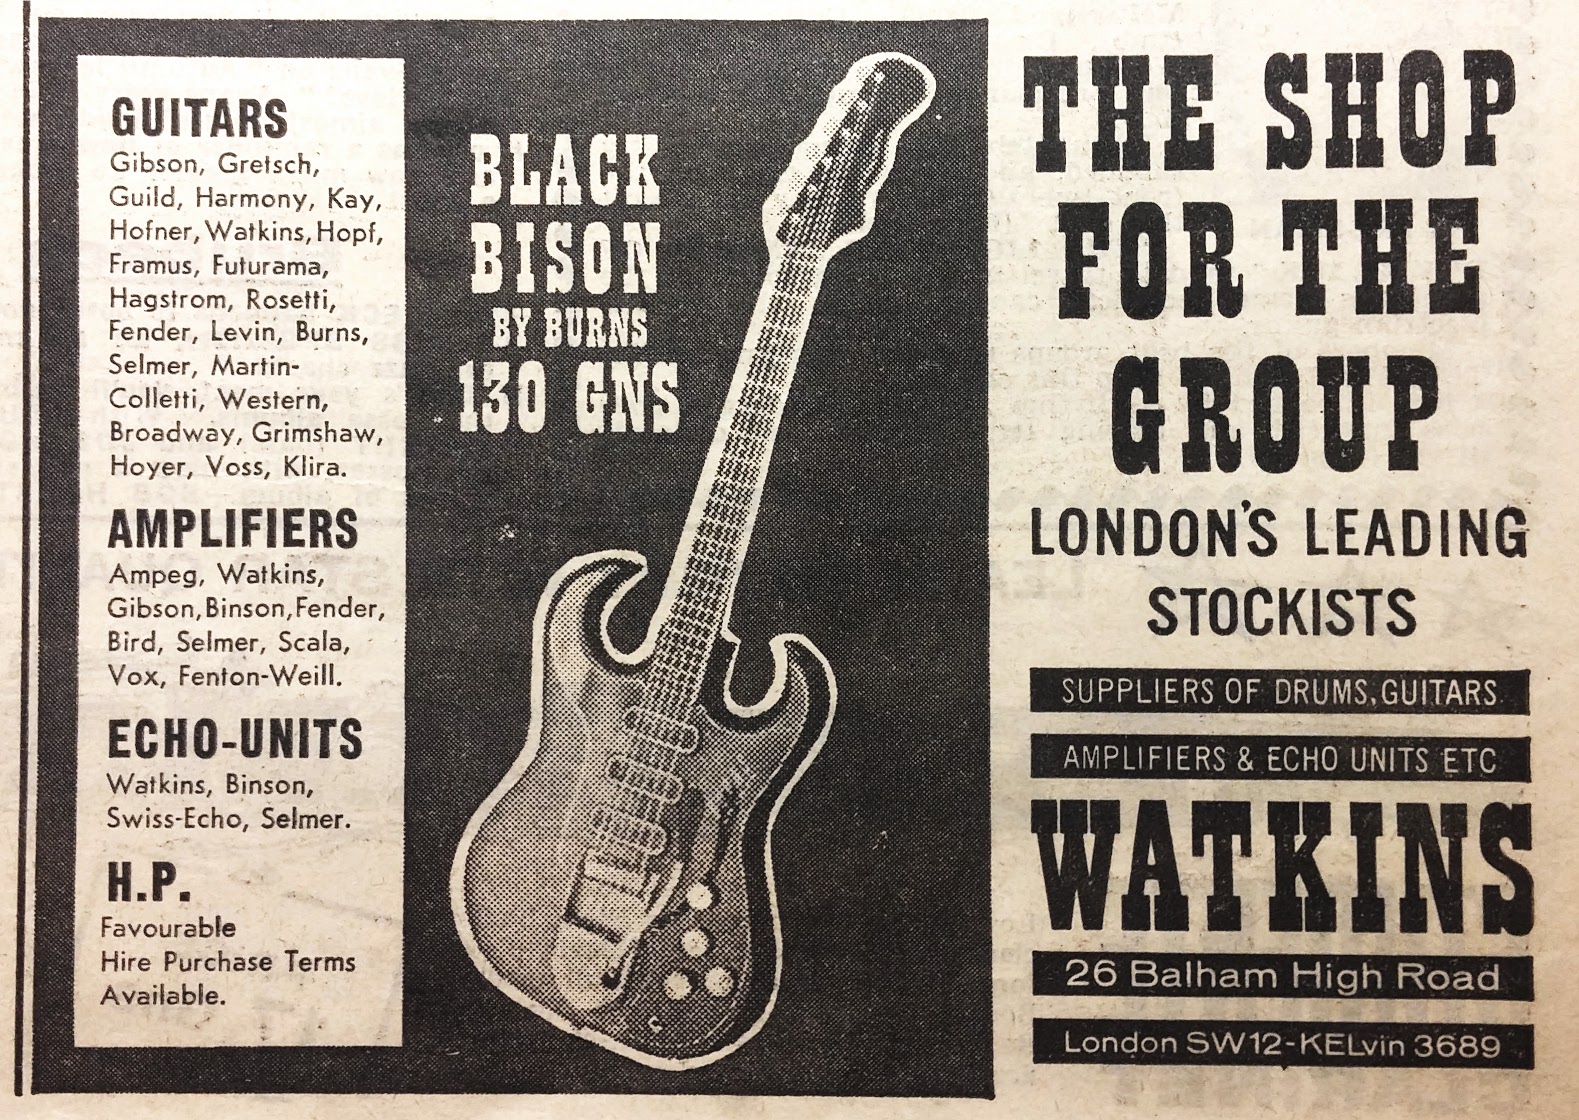 Watkins Burns Black Bison advert